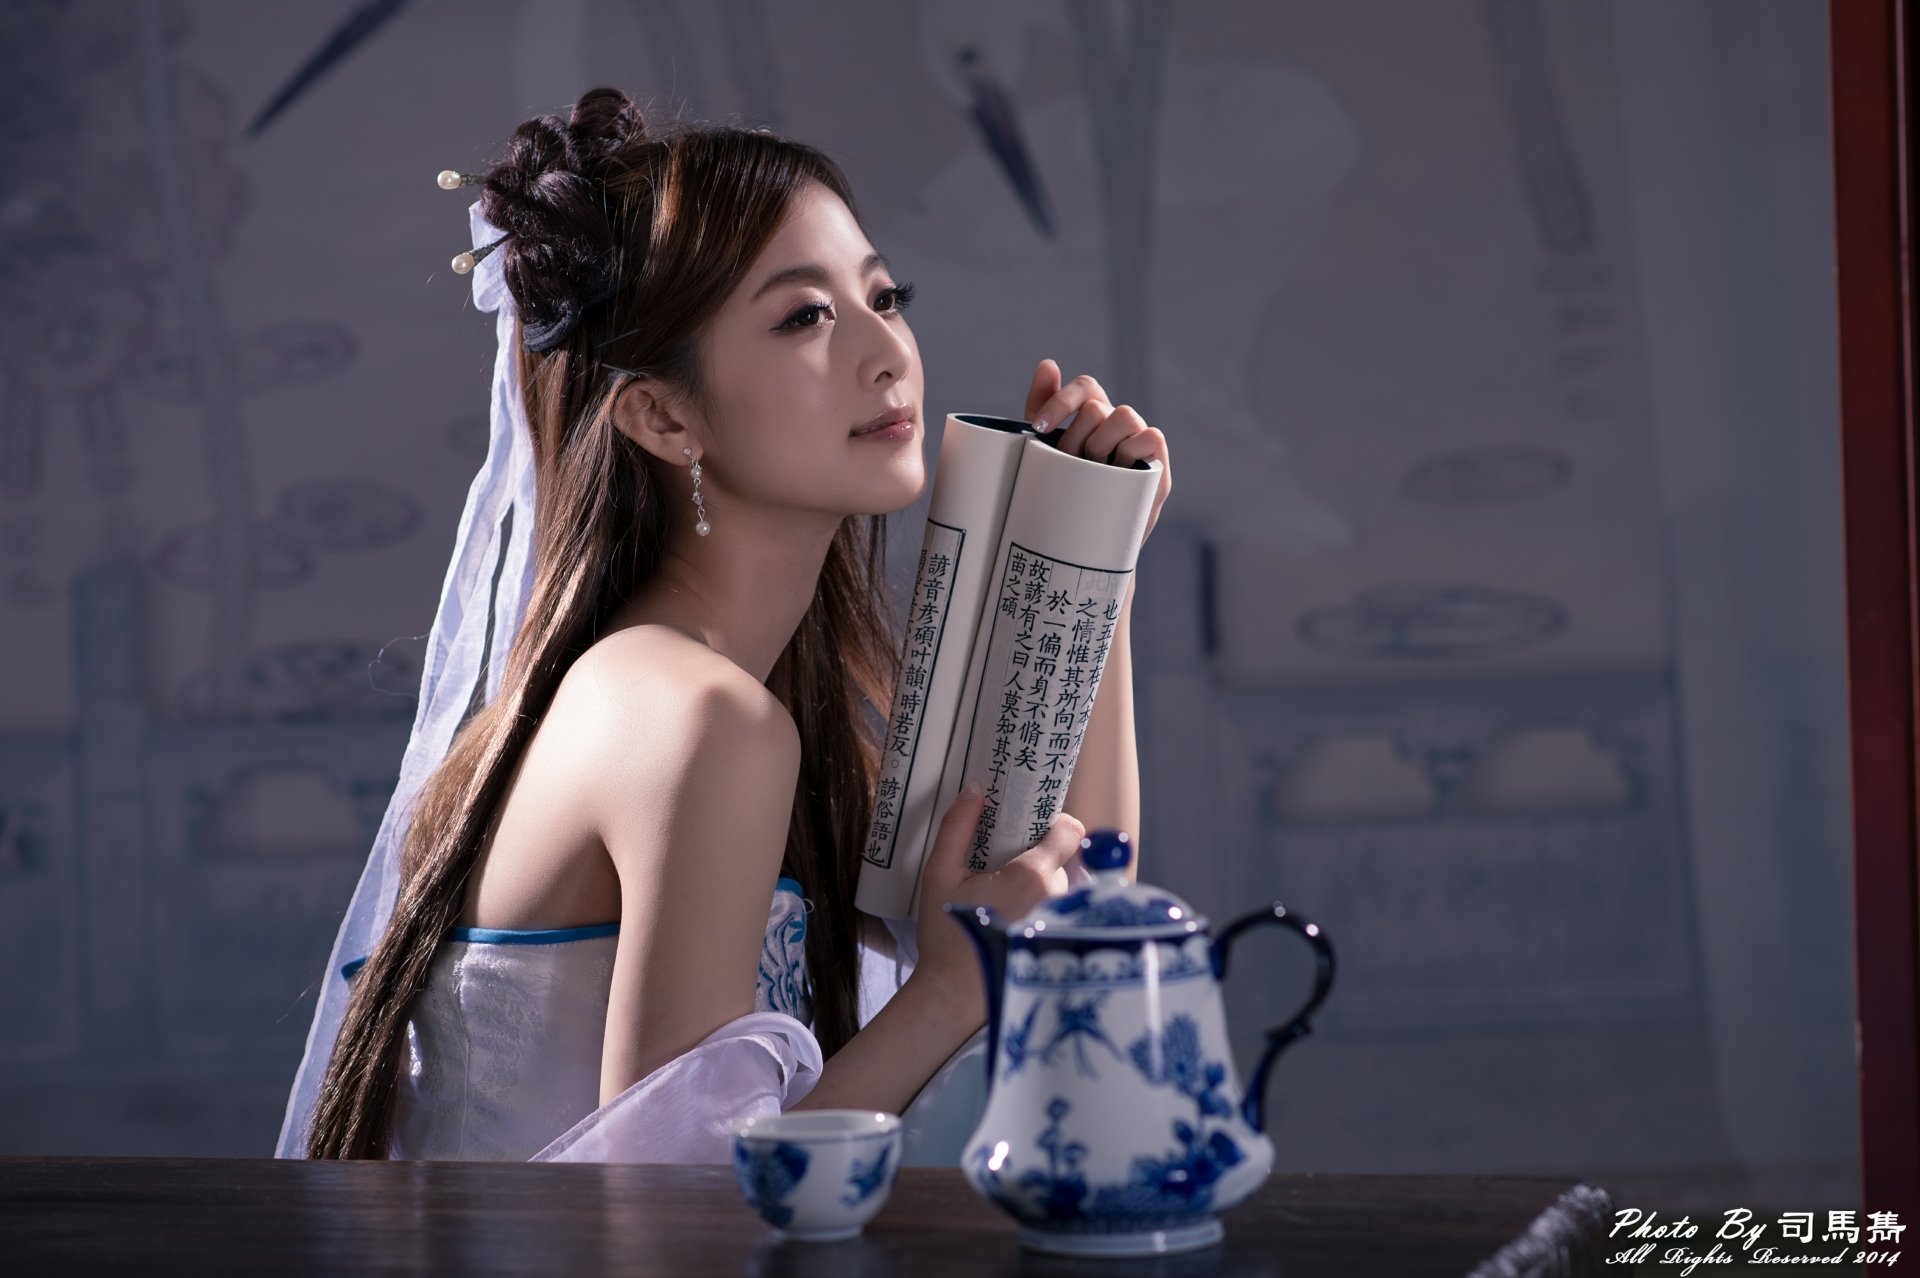 Download China Tea Set Cup Hairpin Hair-dress Chinese Taiwanese Asian Woman Mikako Zhang Kaijie  4k Ultra HD Wallpaper